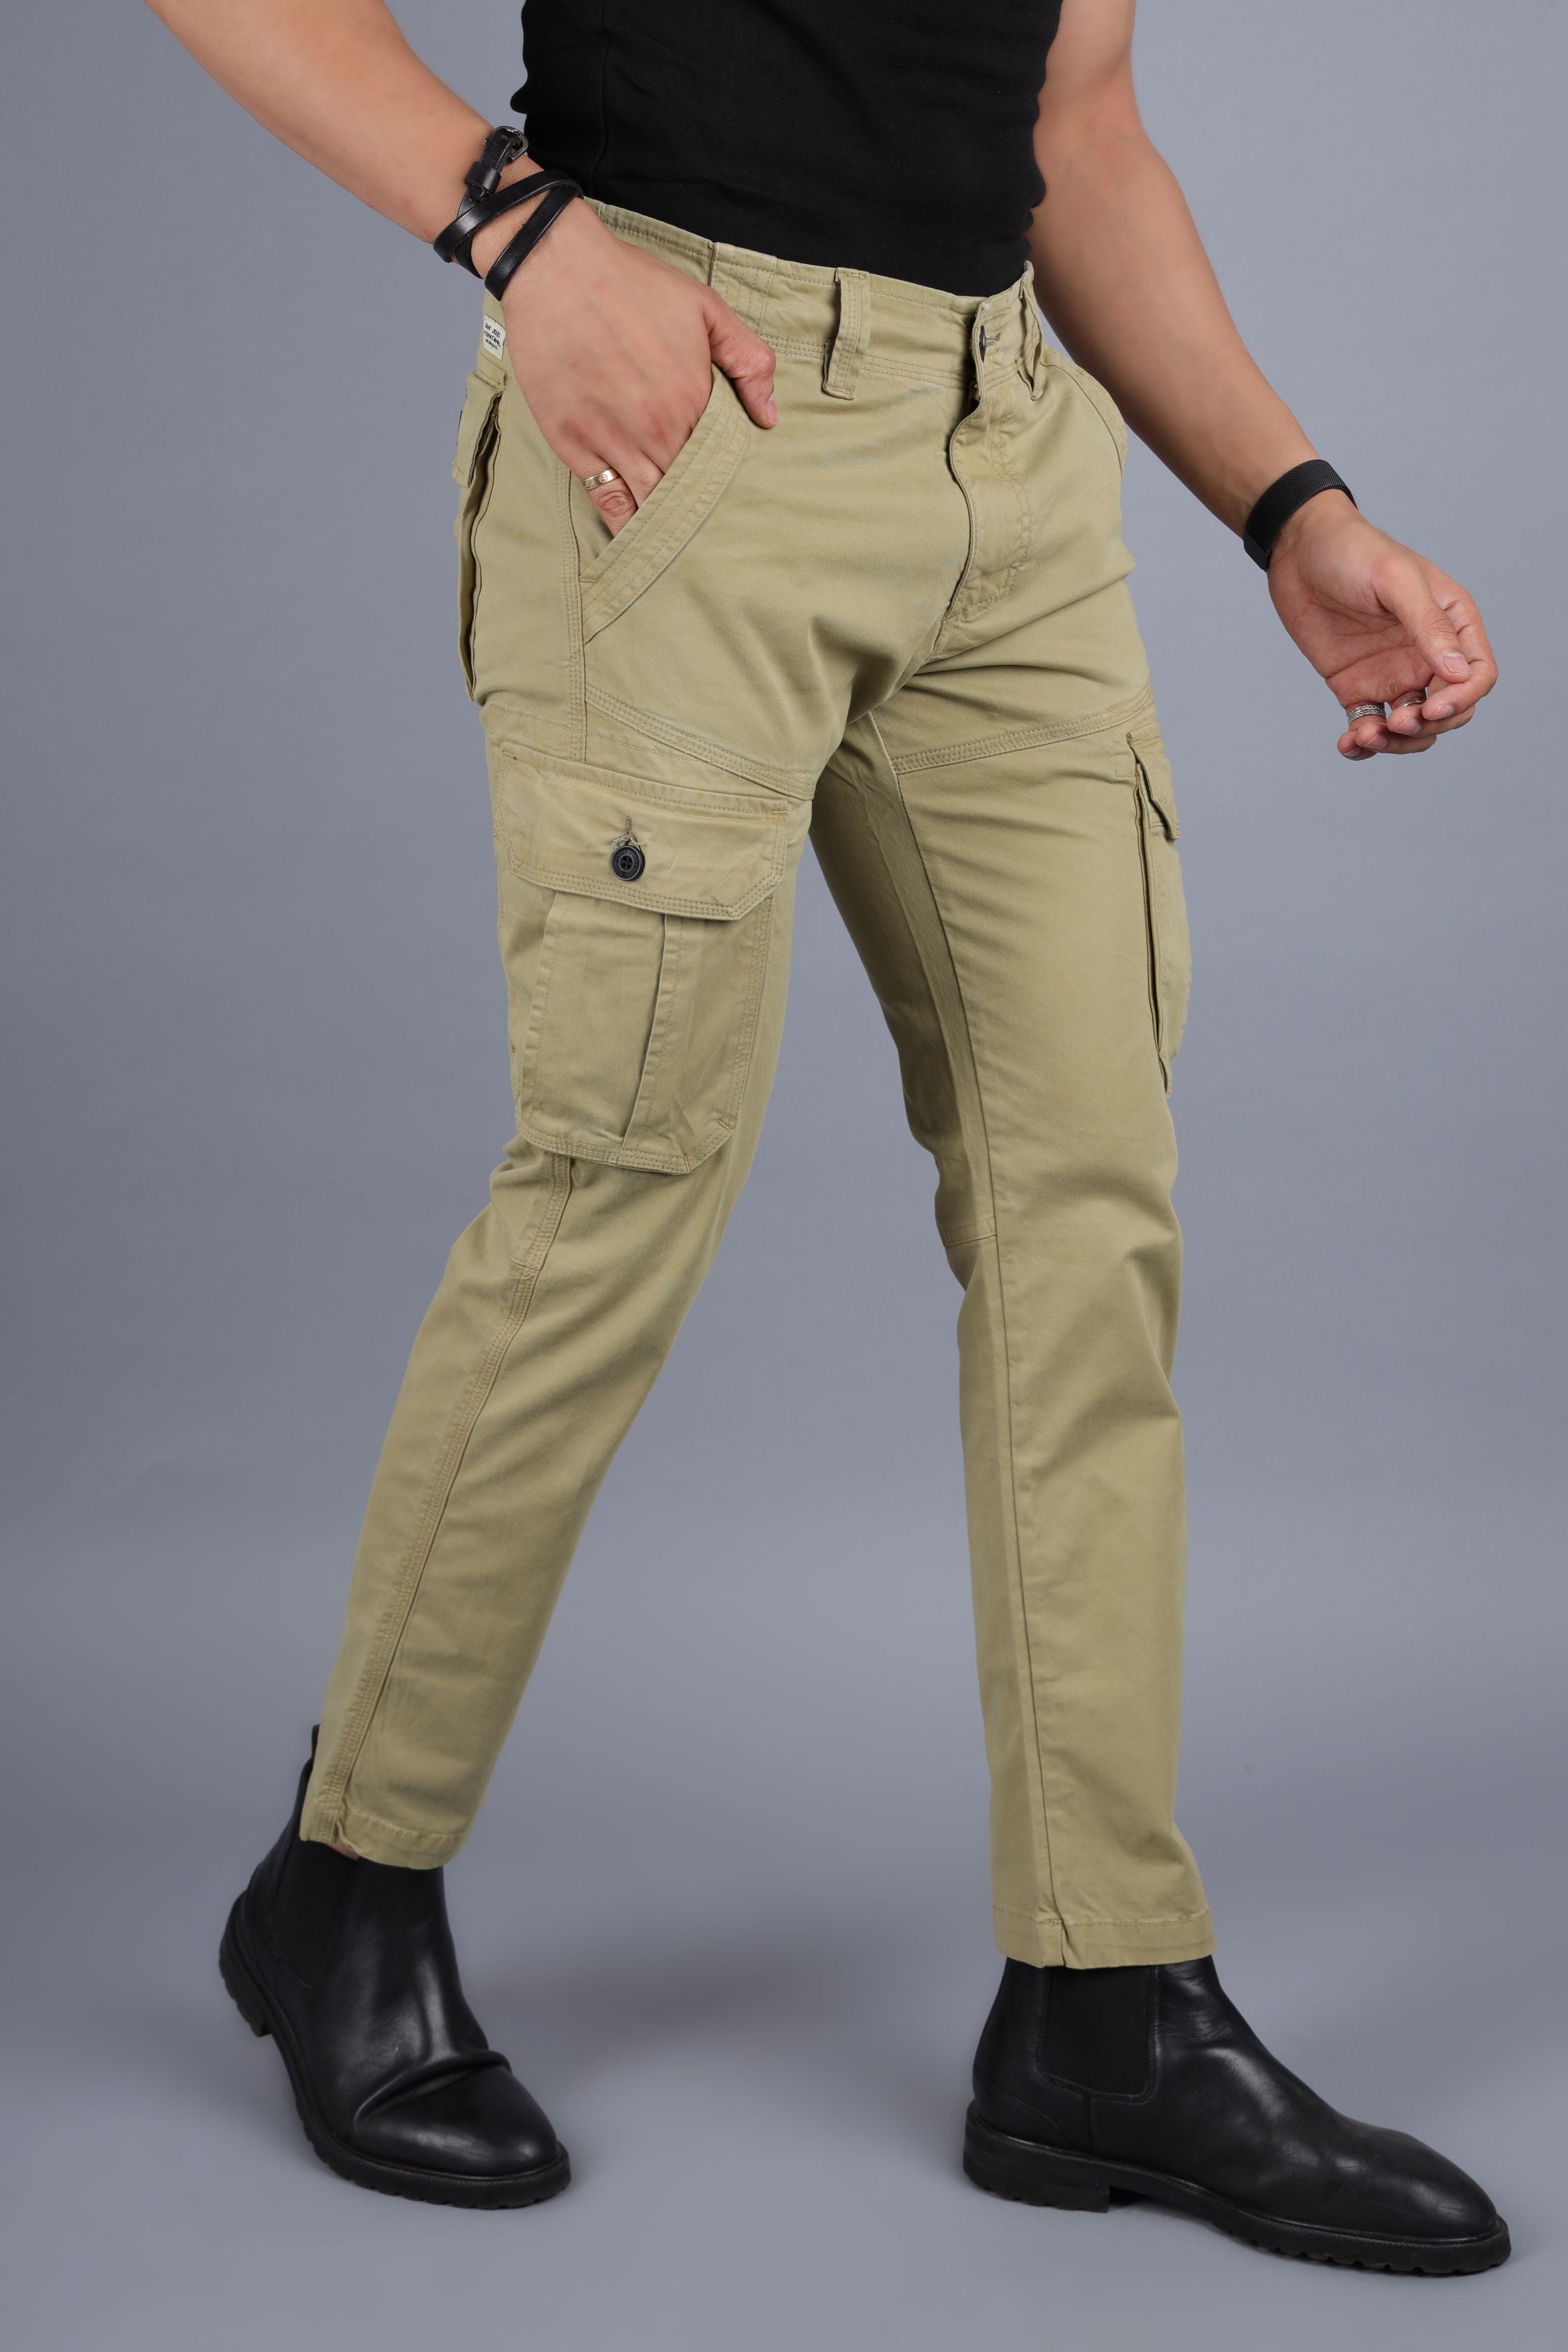 G-Star Raw Men's Regular-Fit Cargo Pants, Created for Macy's - Macy's